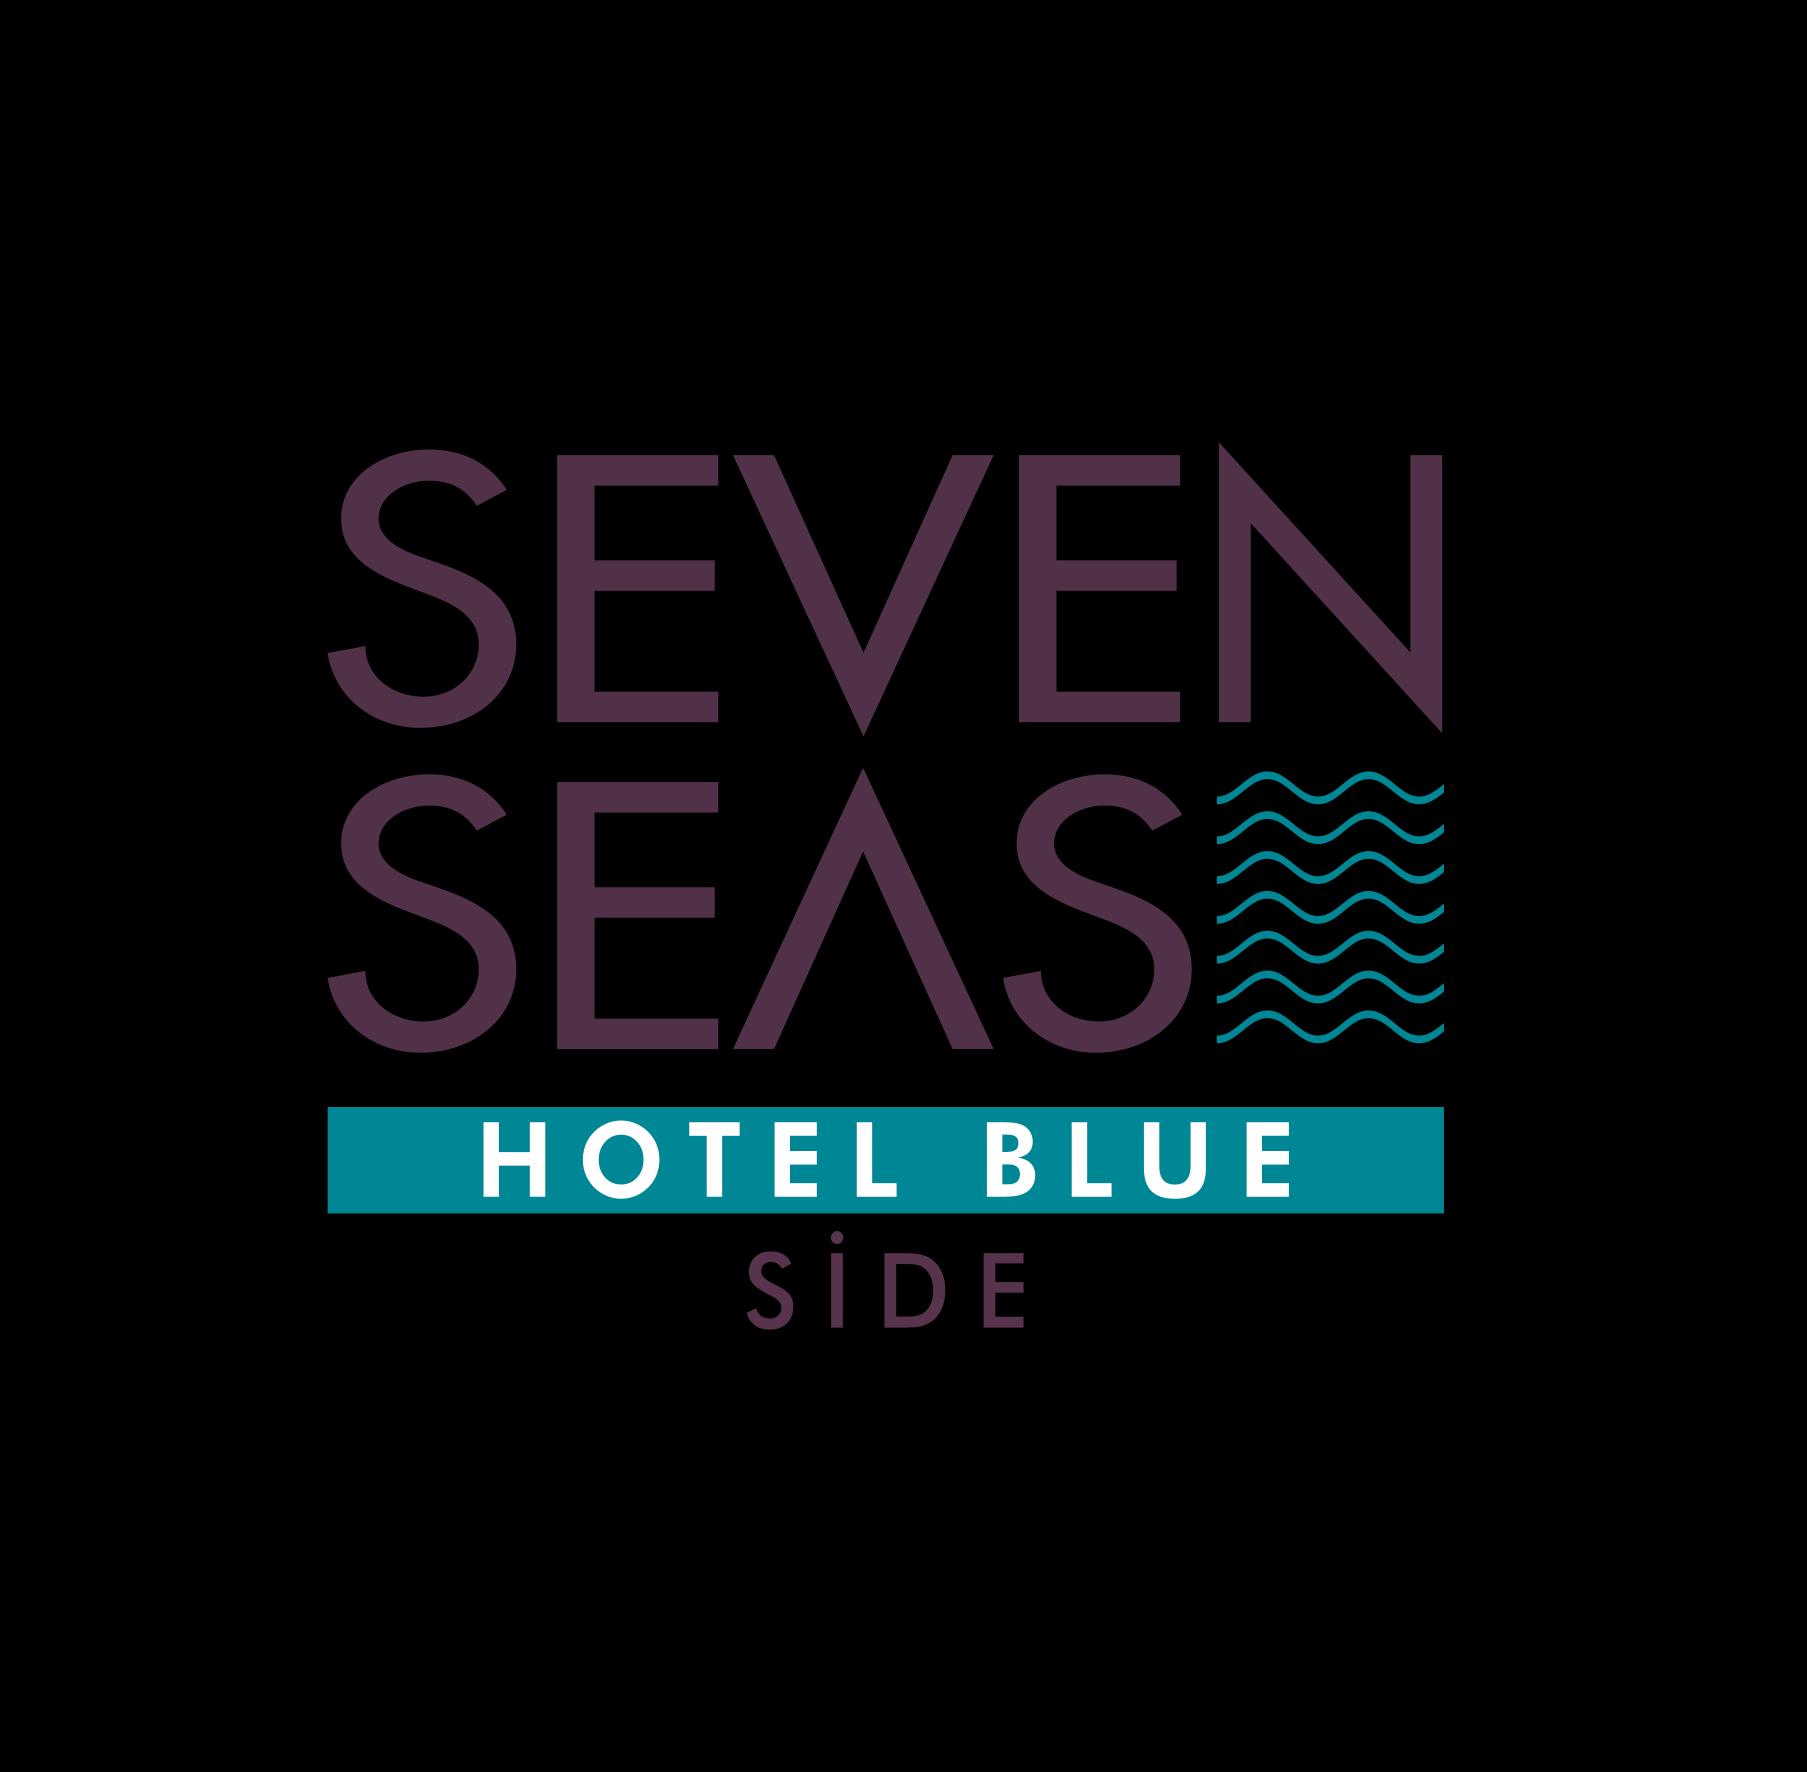 SEVEN SEAS HOTEL BLUE